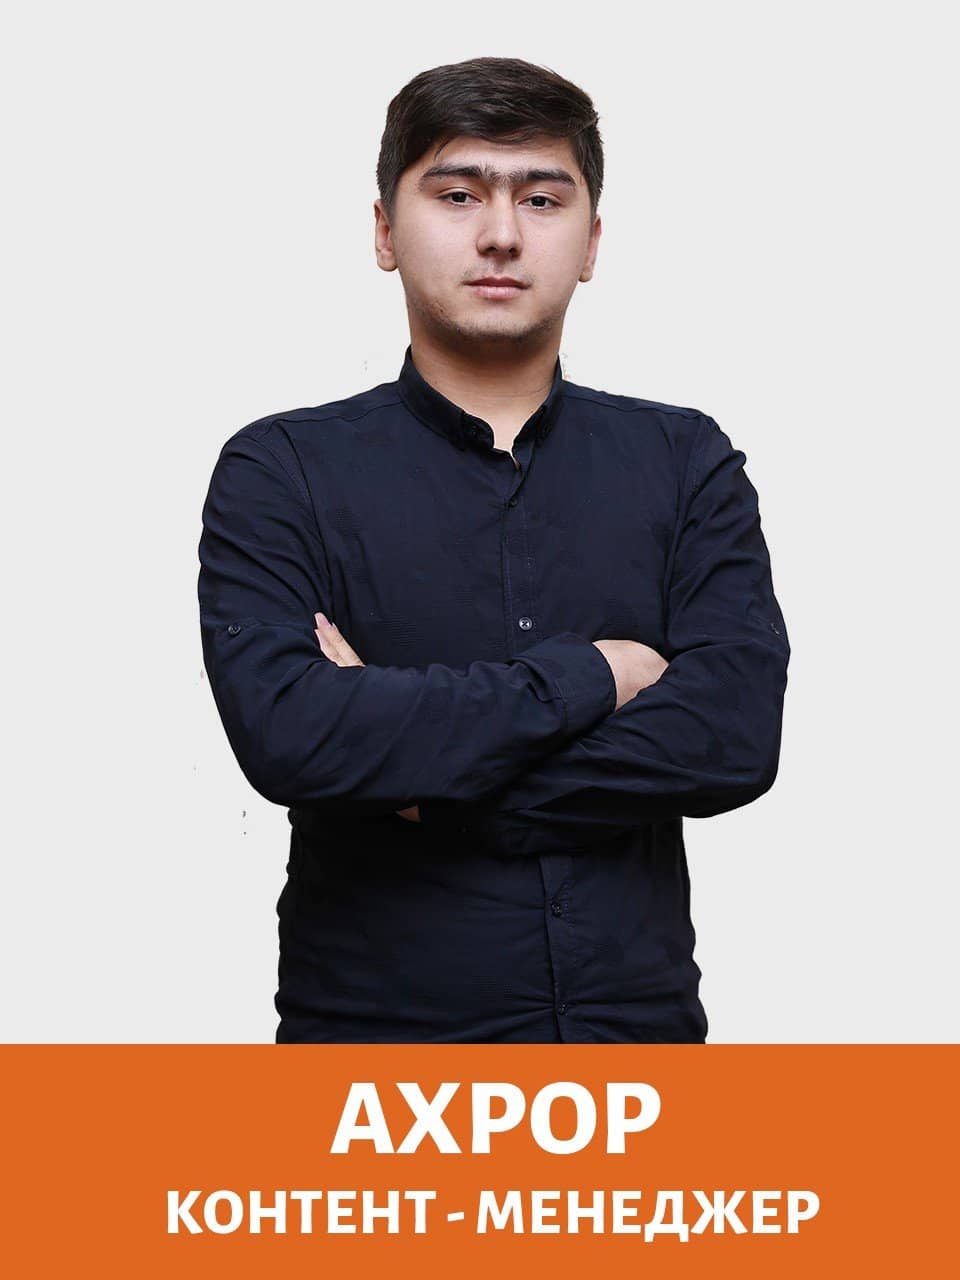 ahror kontent menedzher - Создание сайтов в Атырау